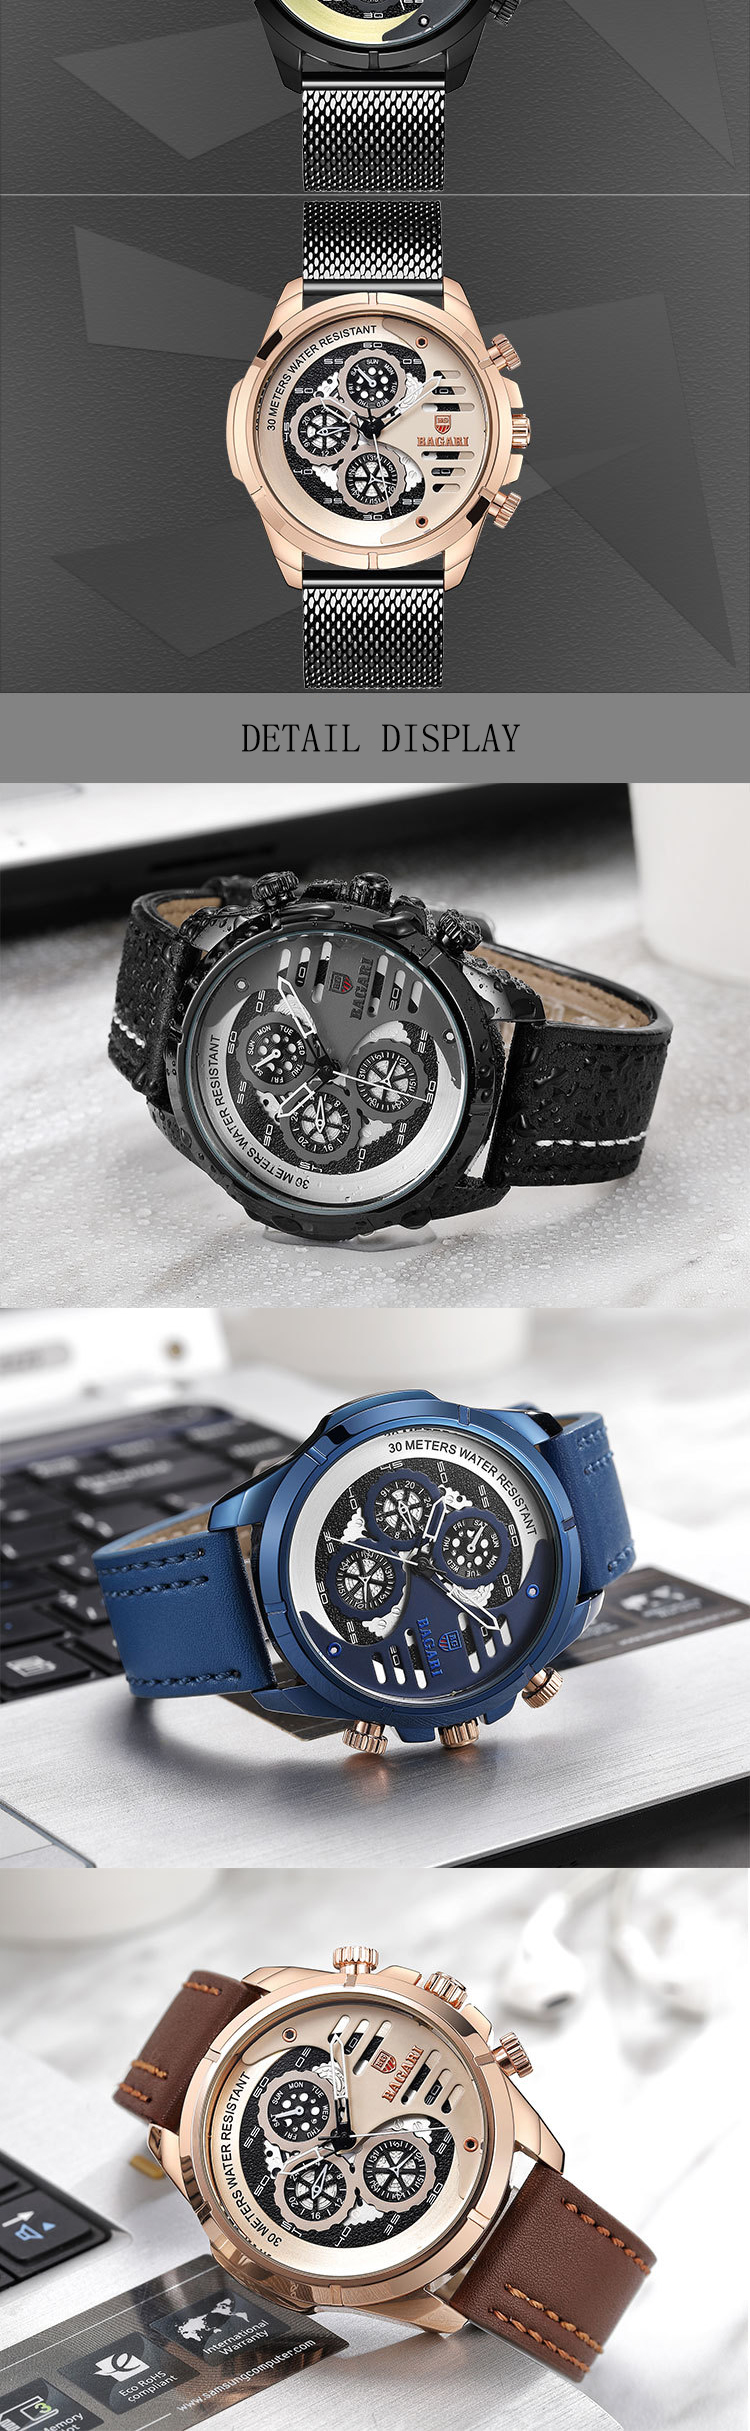 BAGARI-1802-Decorative-Little-Dials-Quartz-Watch-Business-Style-Men-Wrist-Watch-1313193